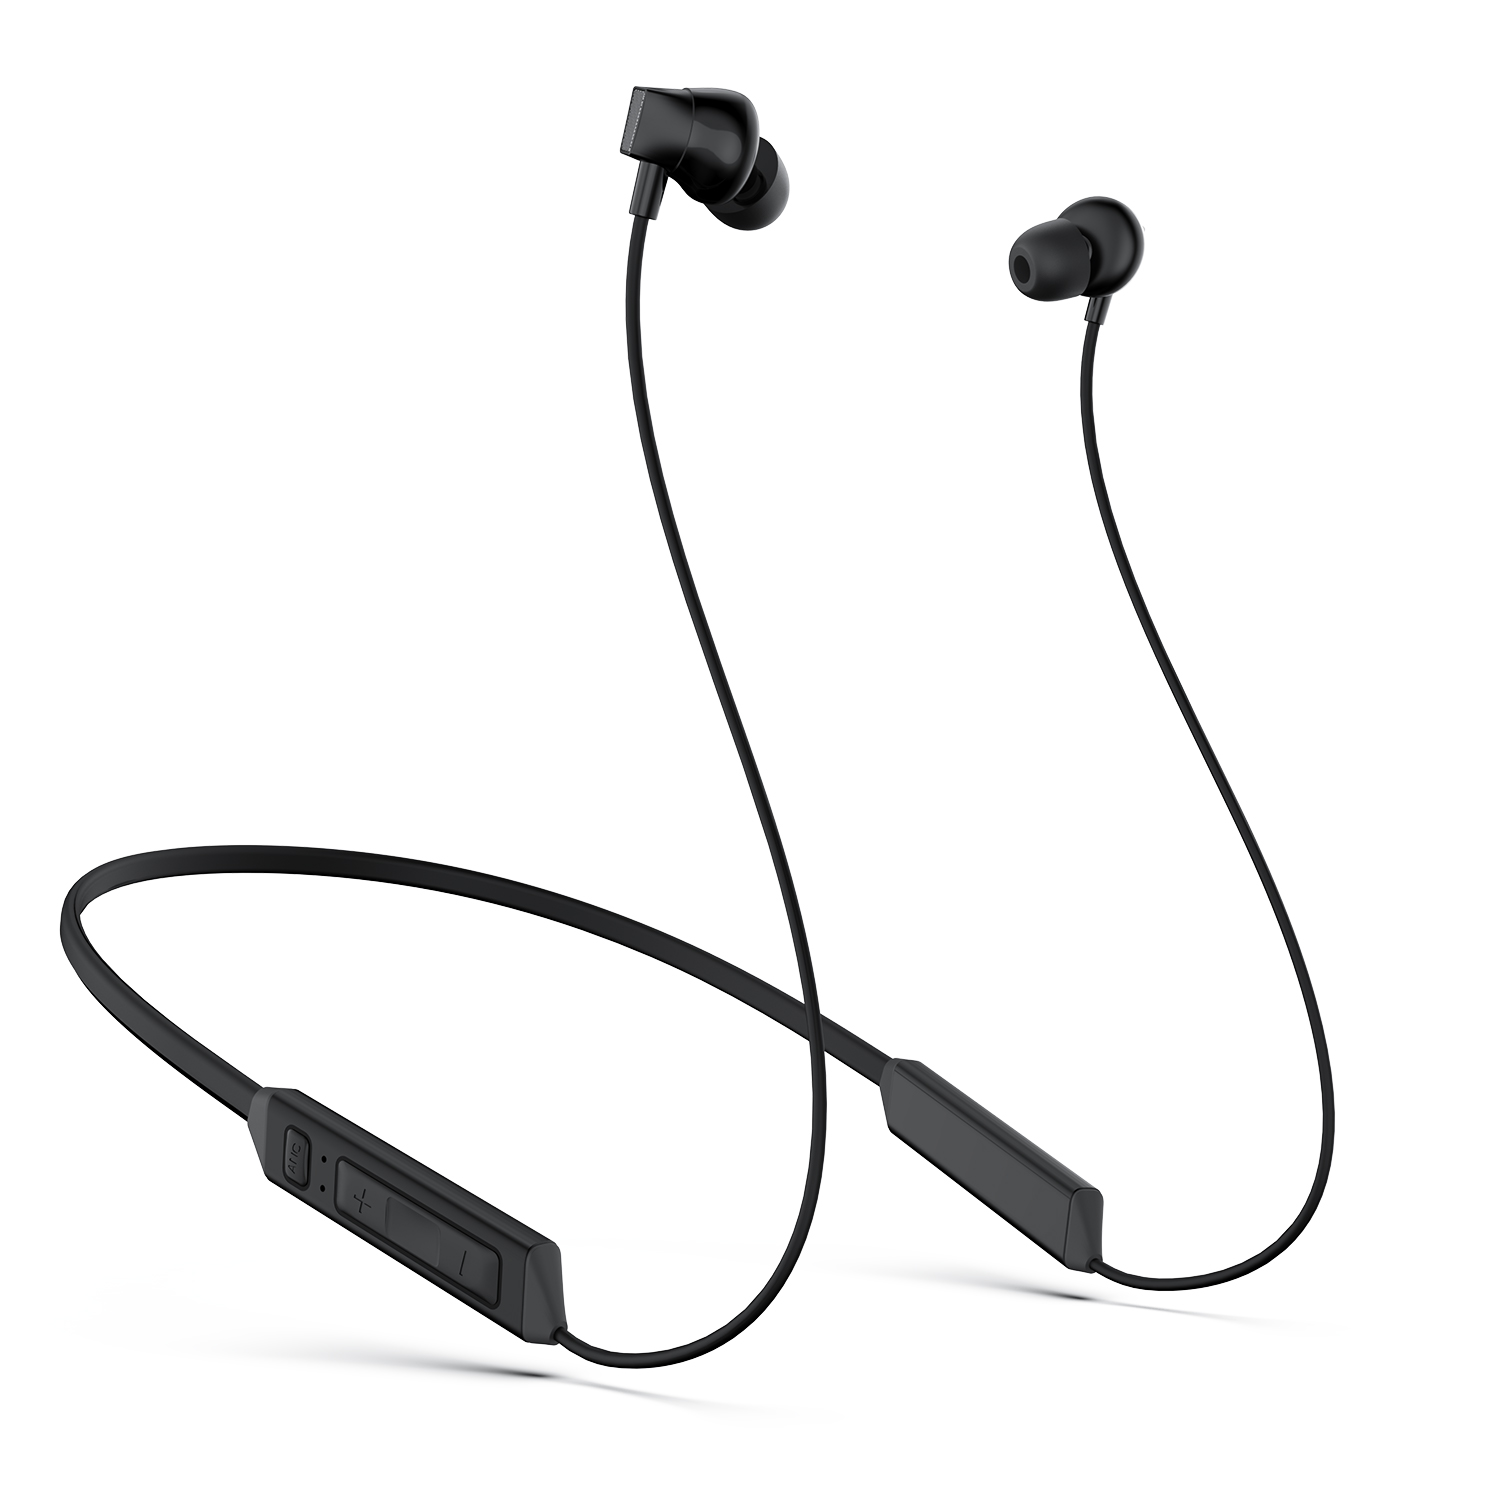 S30 Neckband earphones with hybrid ANC